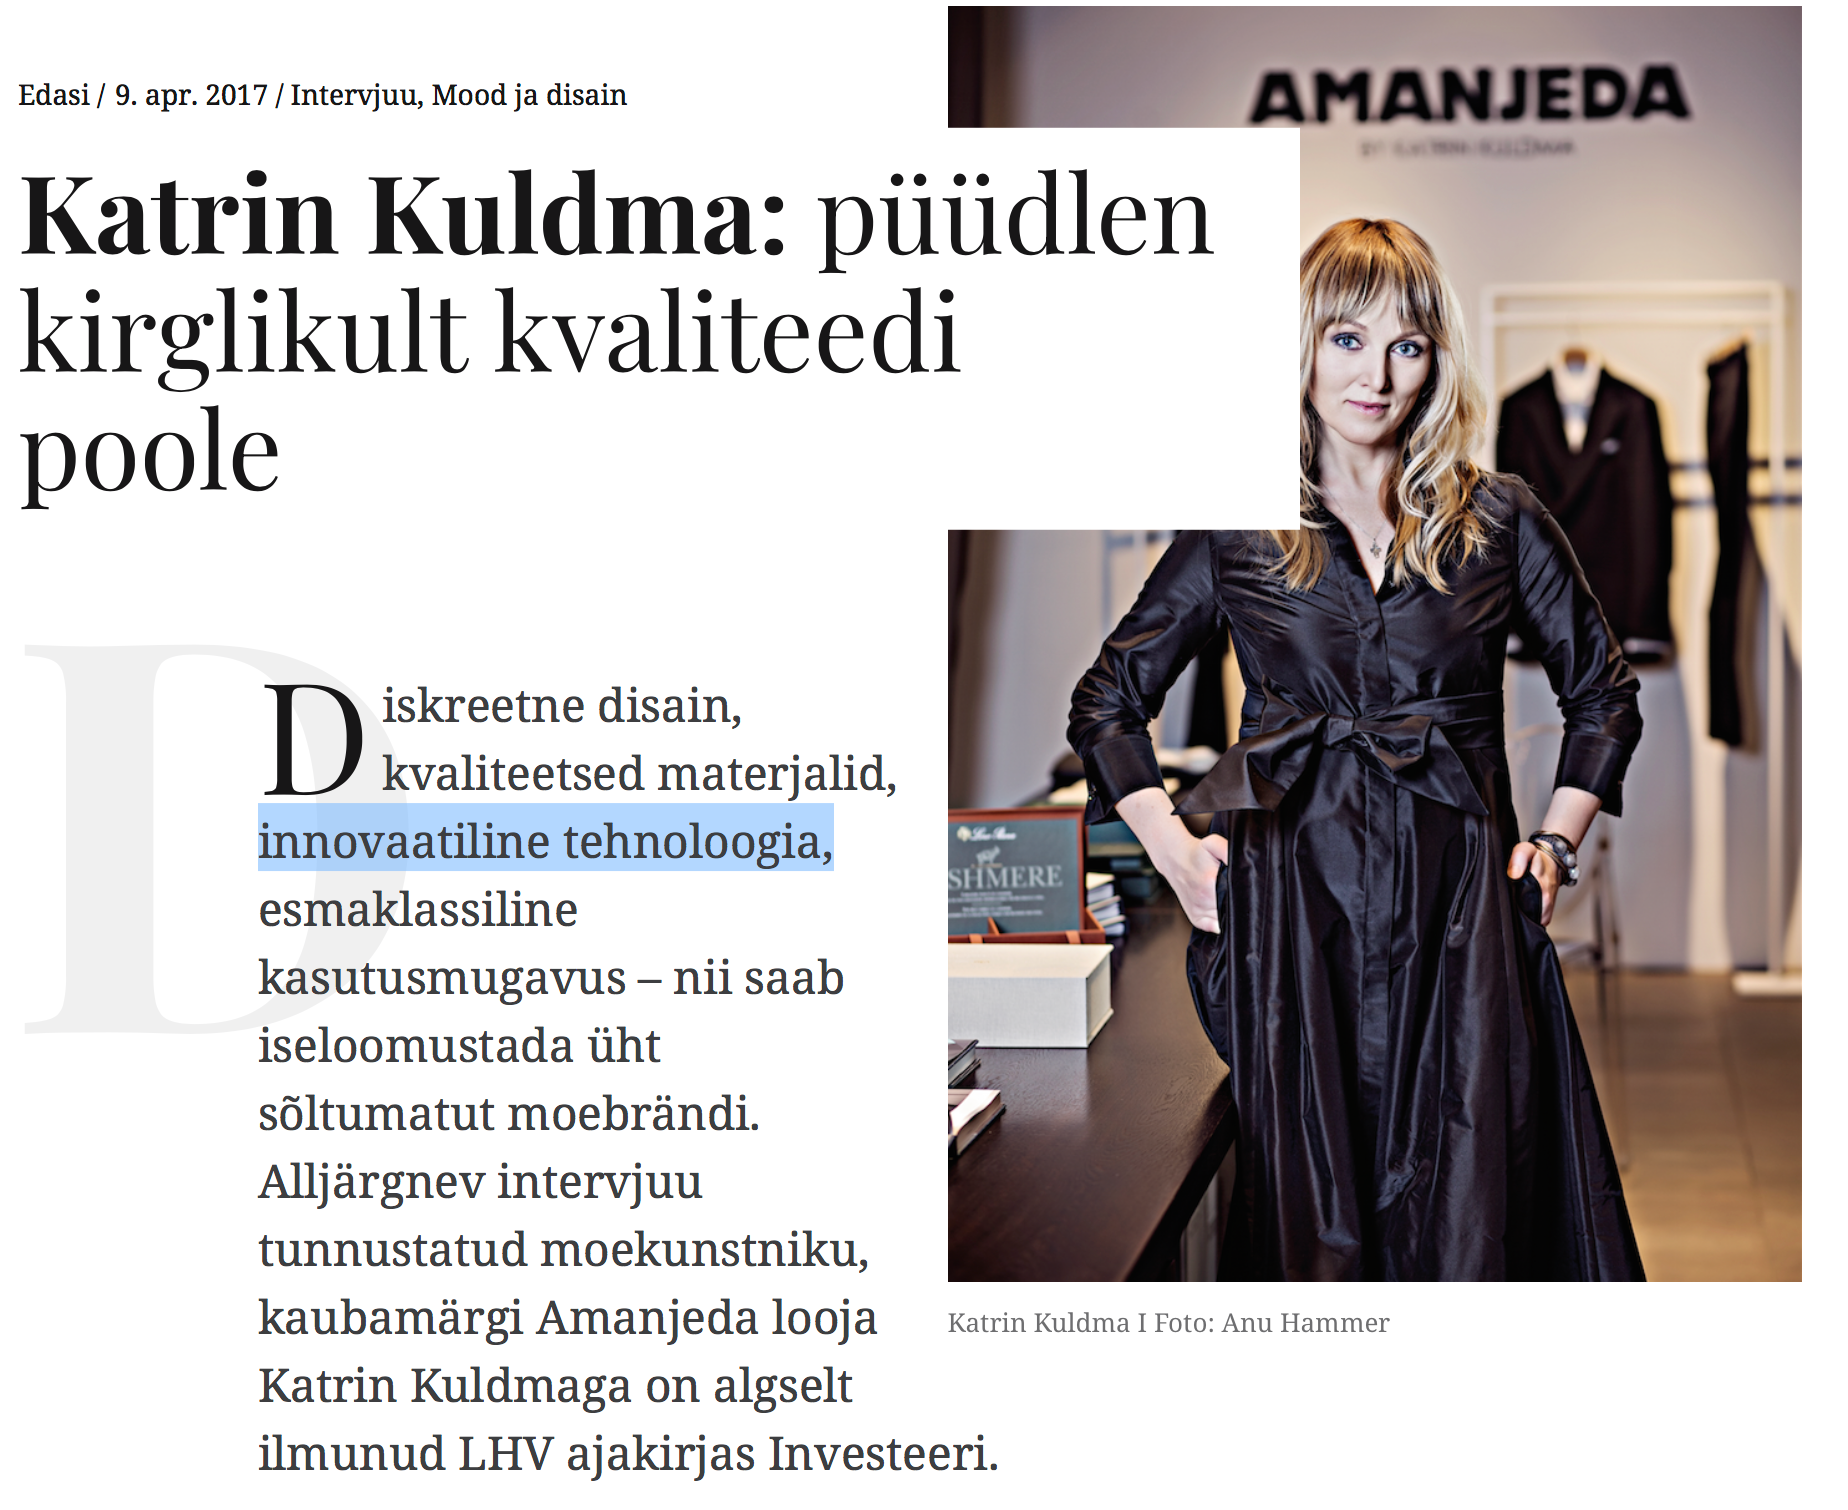 Katrin Kuldma eesti moedisain